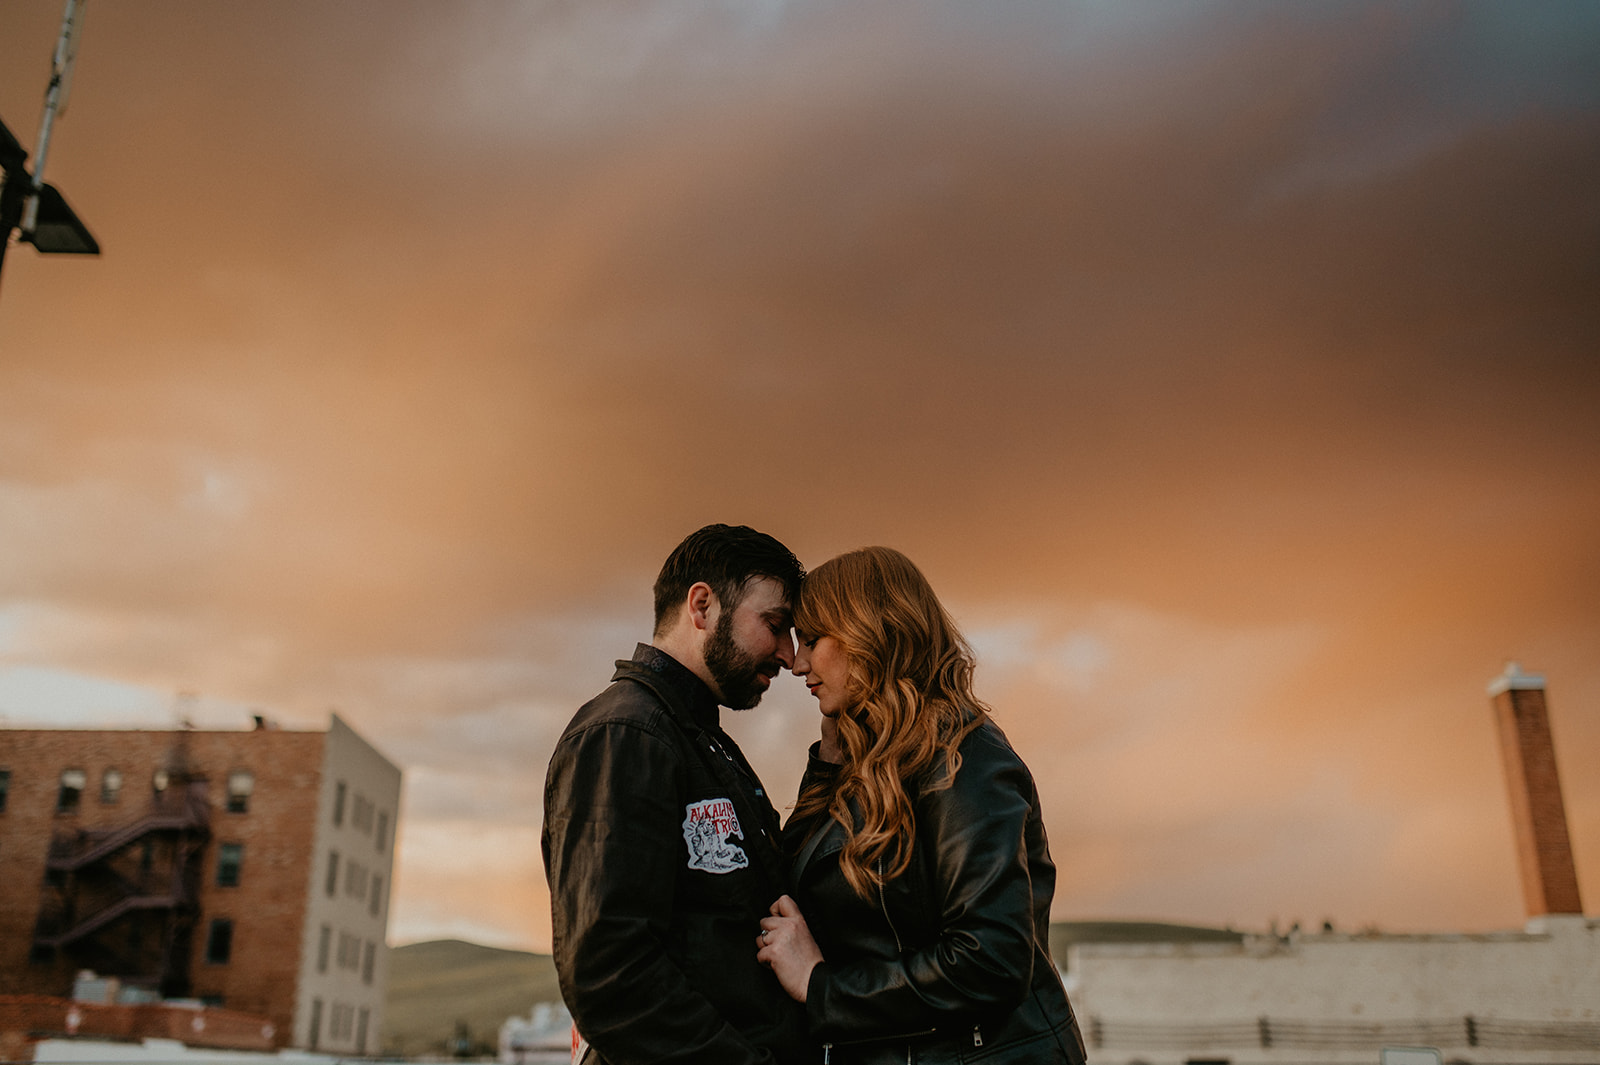 Missoula Montana rooftop engagement photos, wedding photographer, Katy Shay Photo, edgy and romantic couple, golden Hour